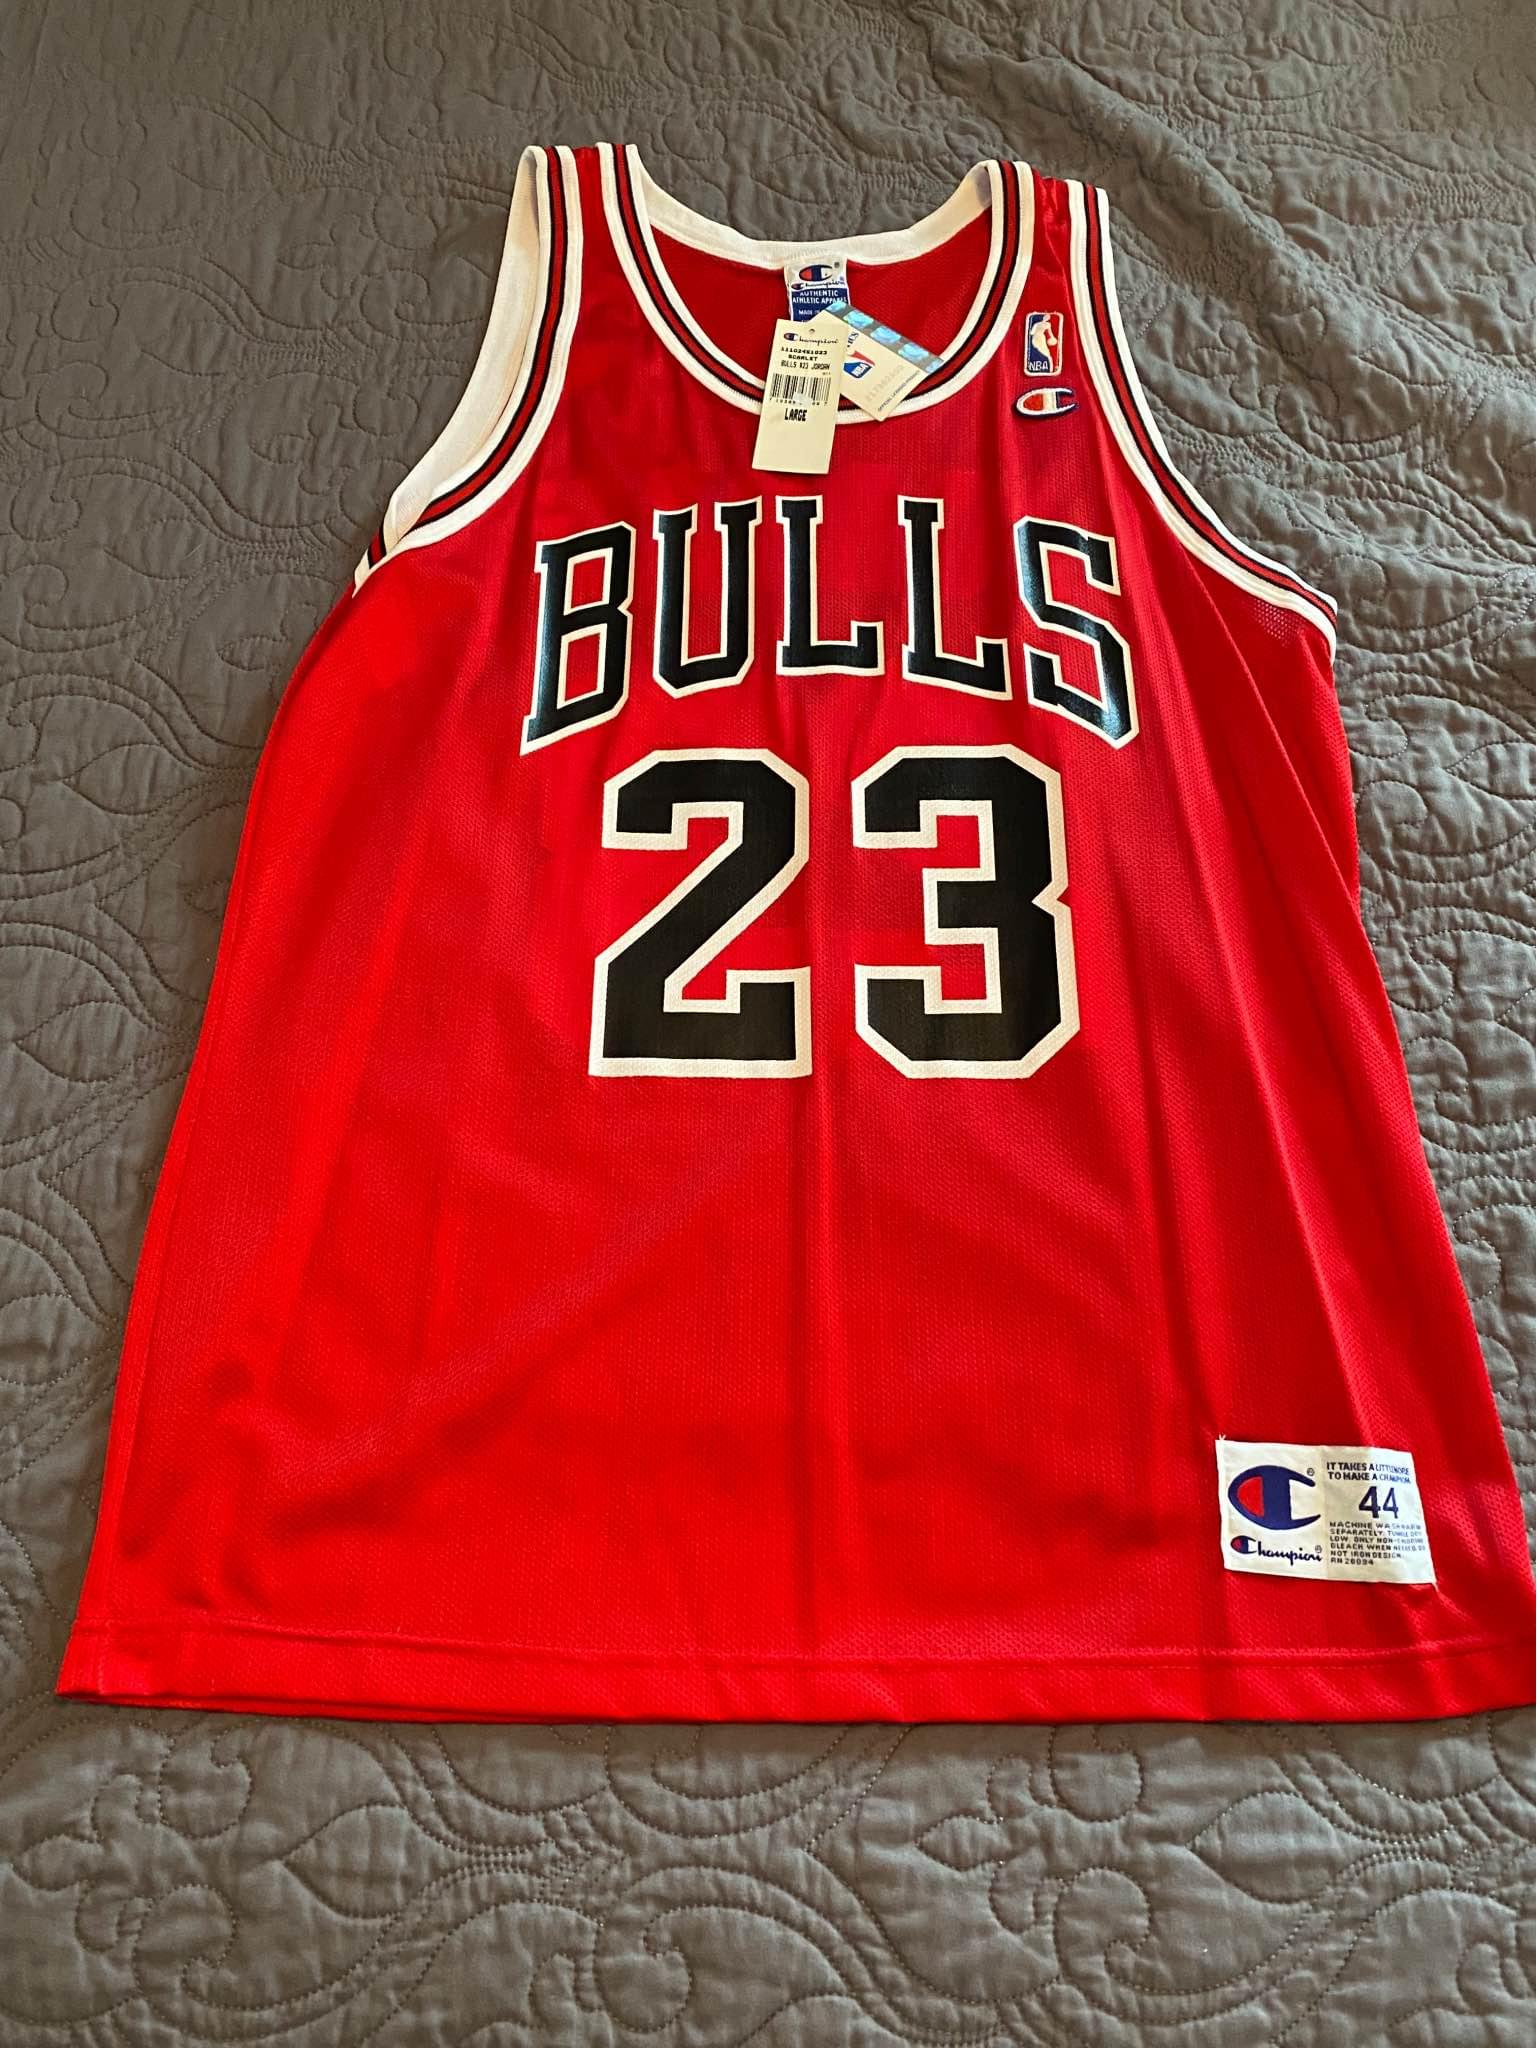 jersey chicago bulls jordan 23